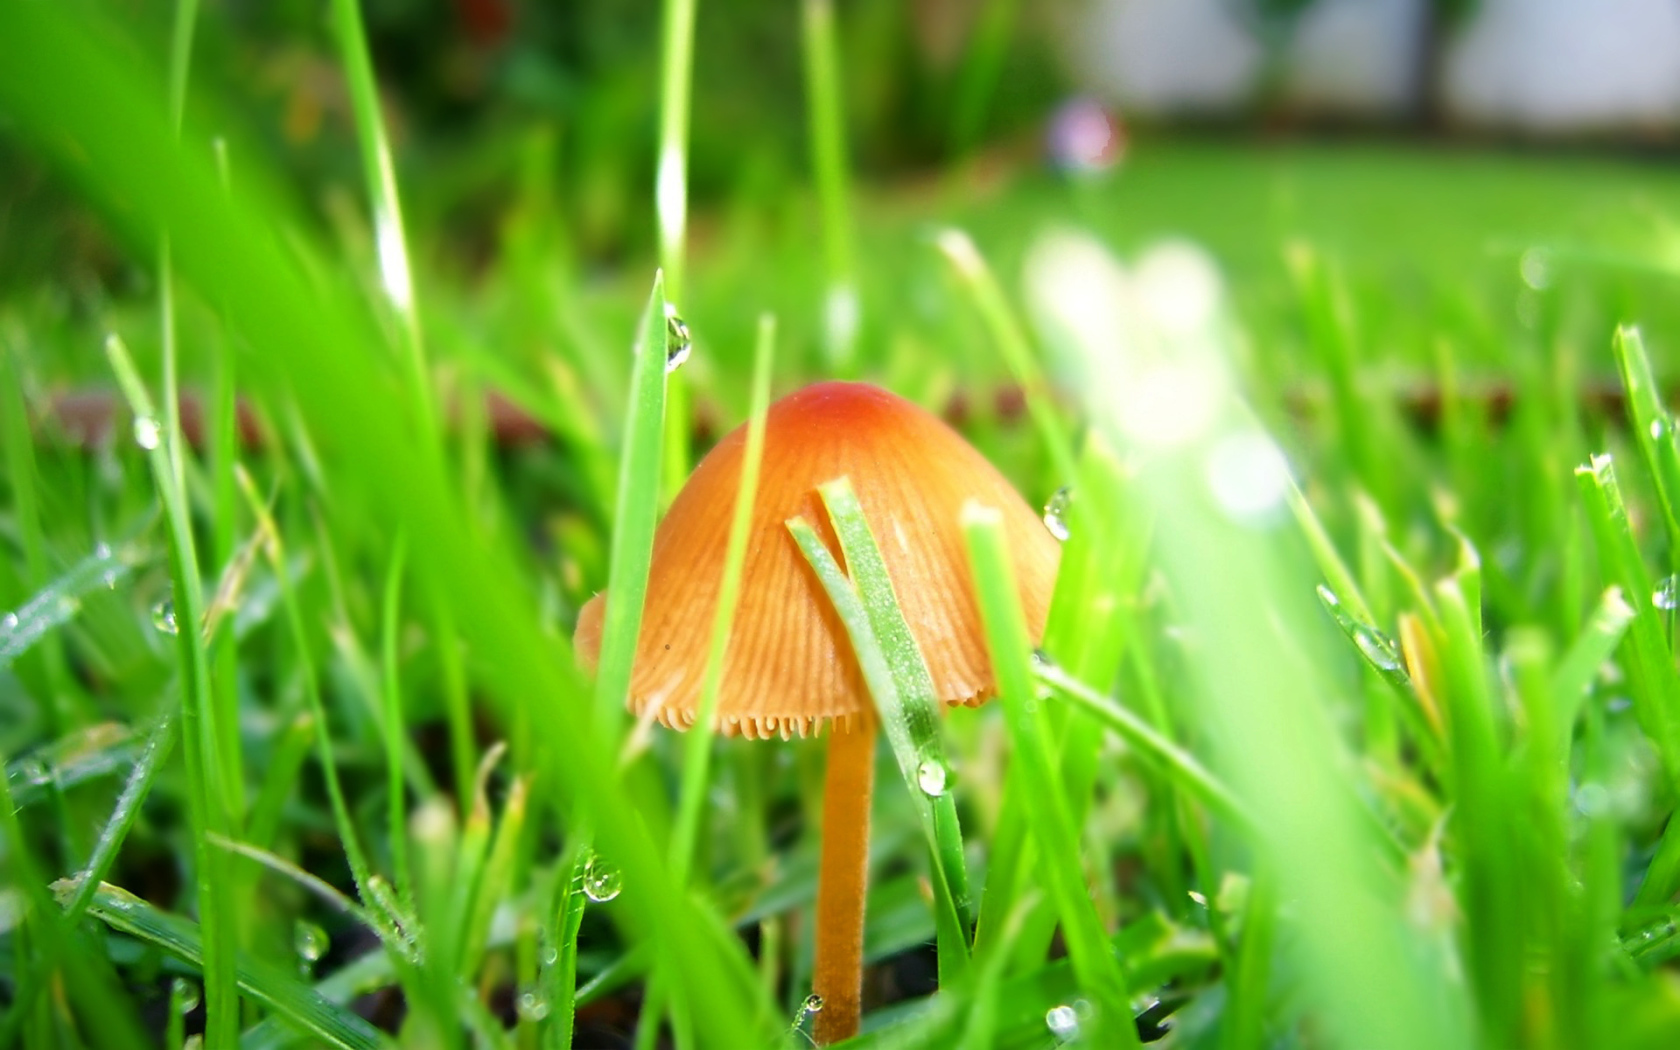 Mushrooms after the rain